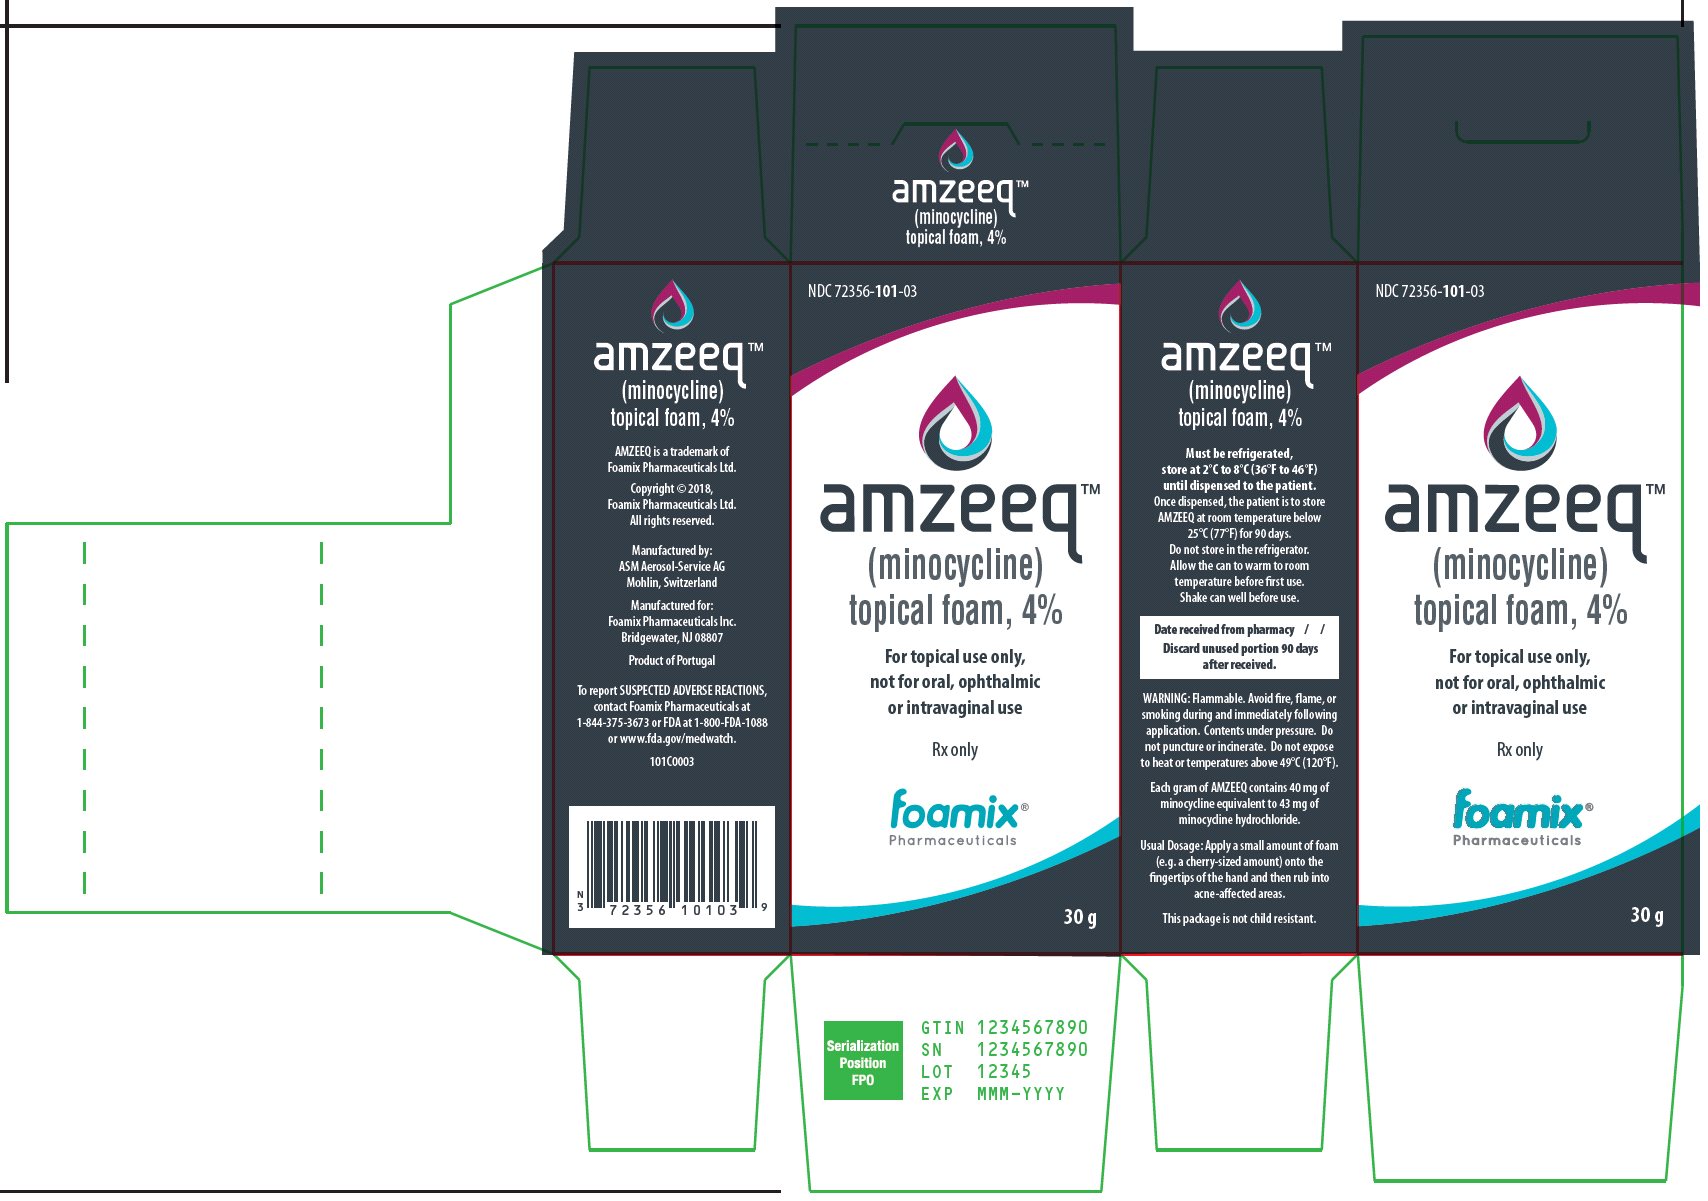 Amzeeq (minocycline) topical foam, 4% carton label